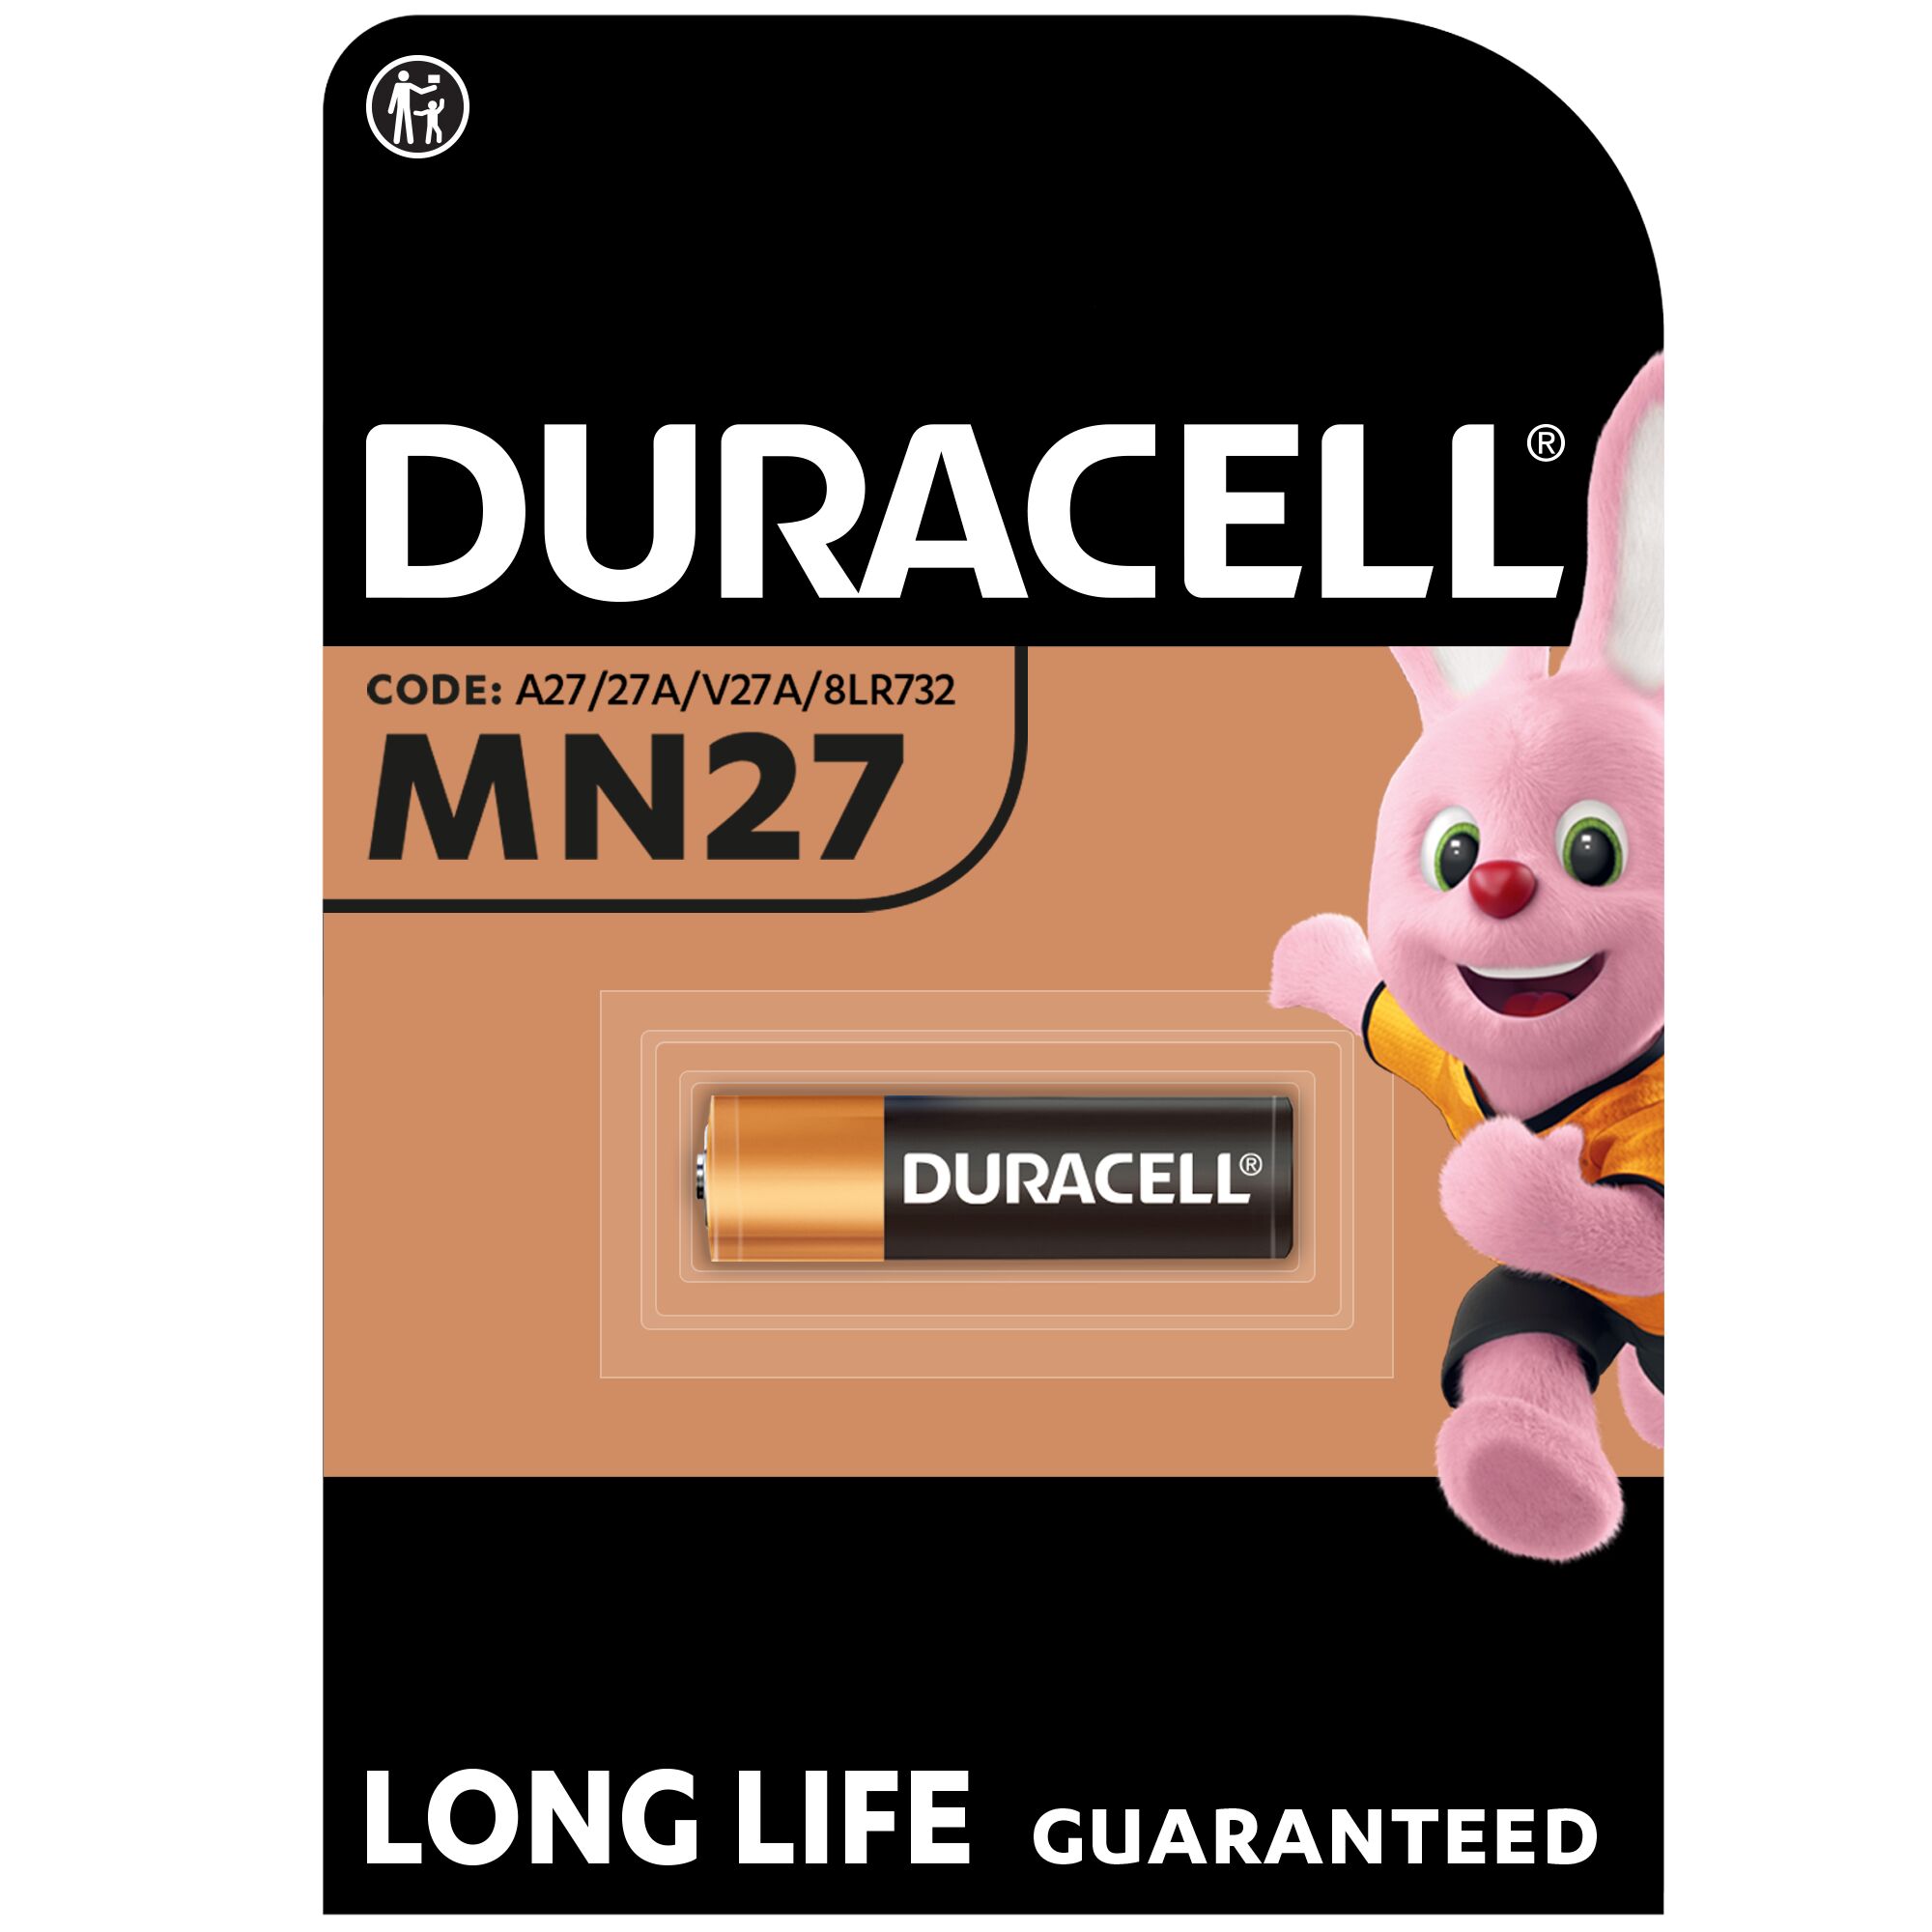 Спеціалізована лужна батарейка Duracell 12V MN27 A27/27A/V27A/8LR732 (706029) - фото 1